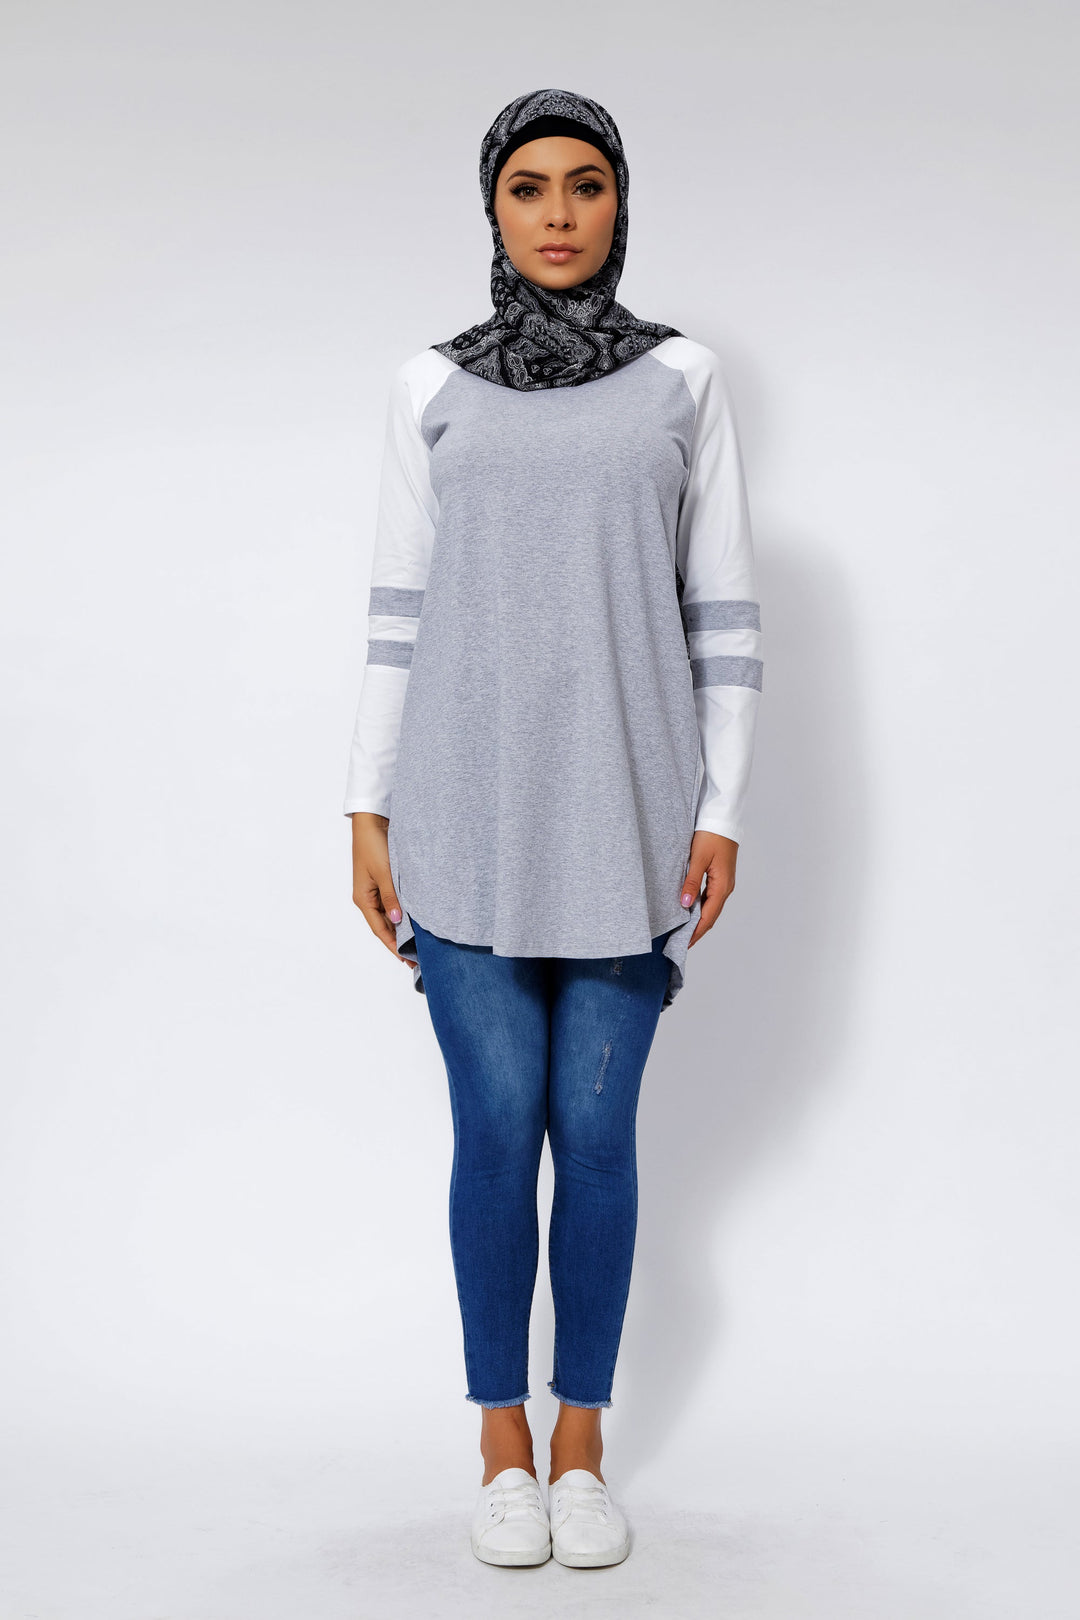 Urban Modesty - Heather Gray Basic Long Sleeve Cotton Tunic